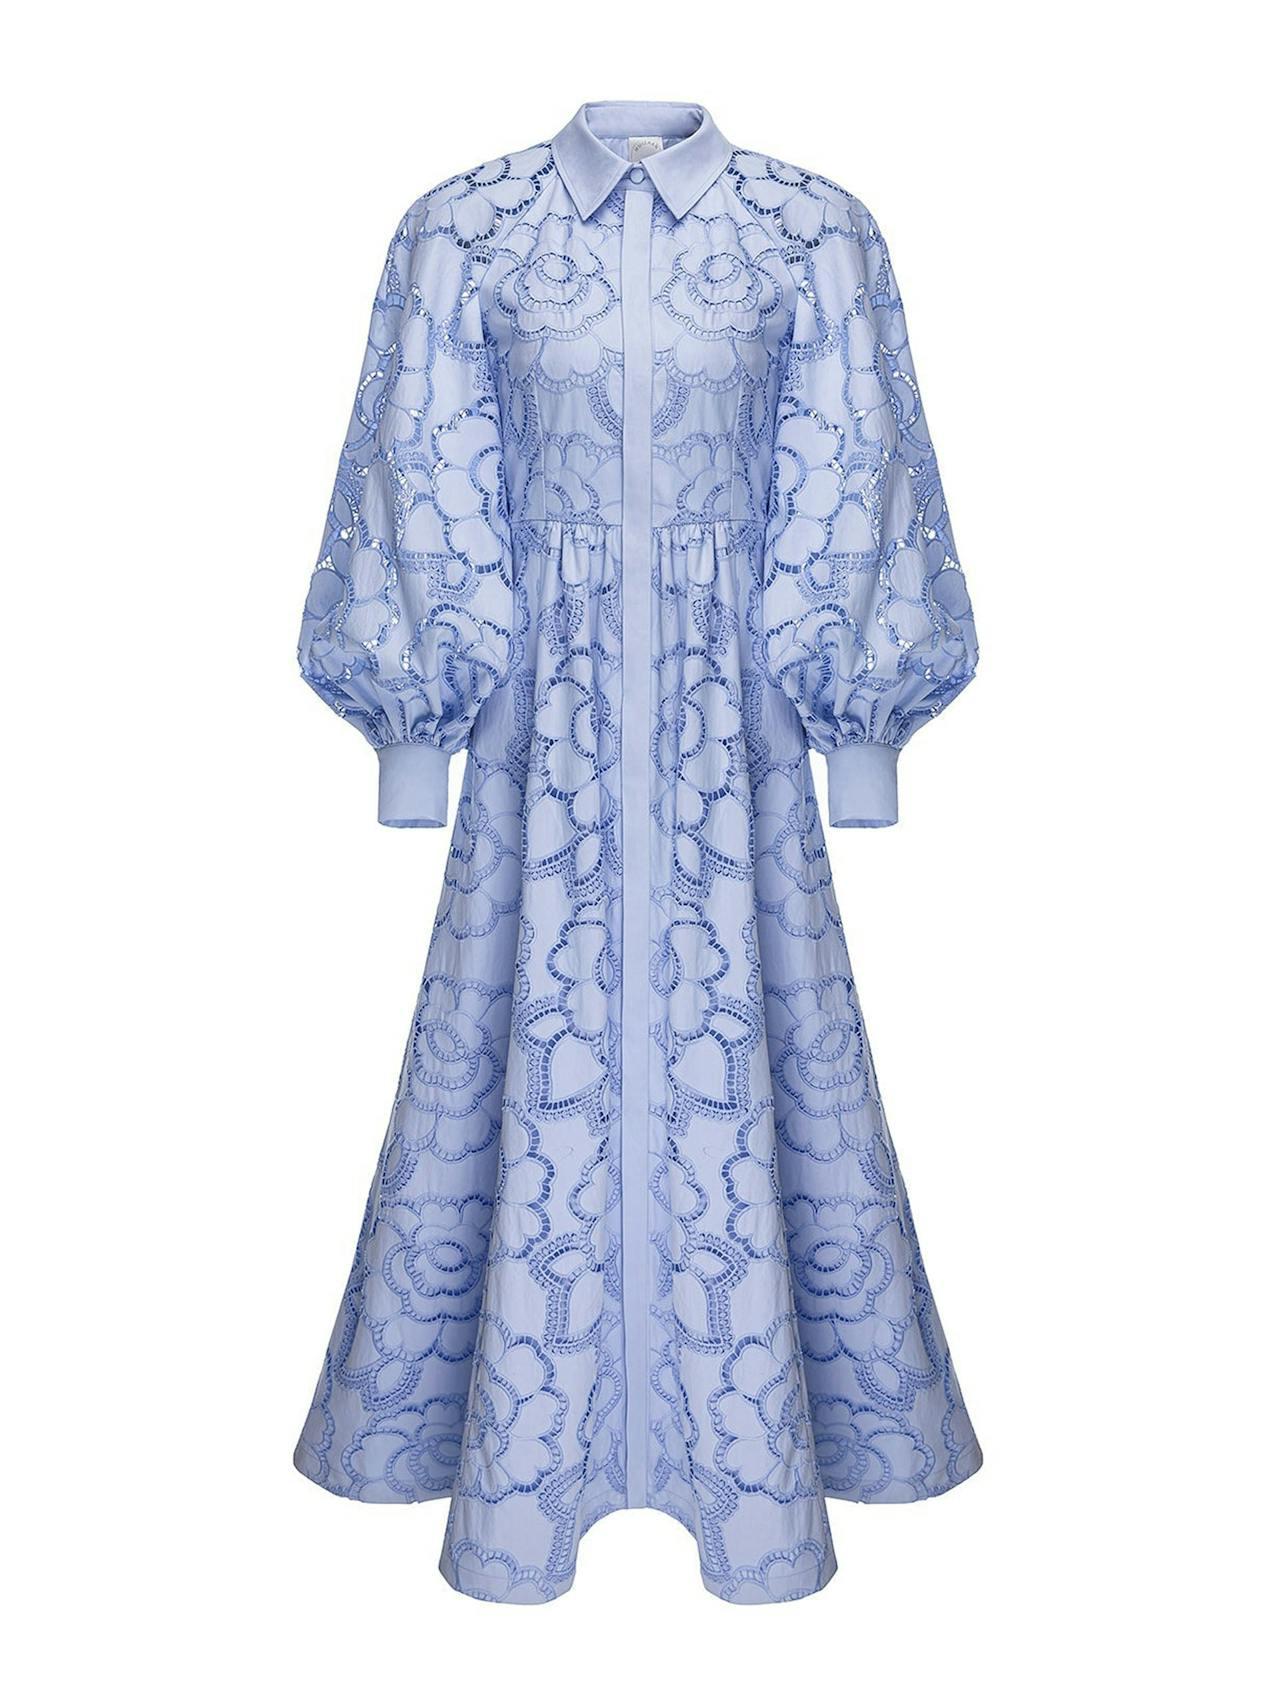 Sky blue embroidered cotton Lilli dress